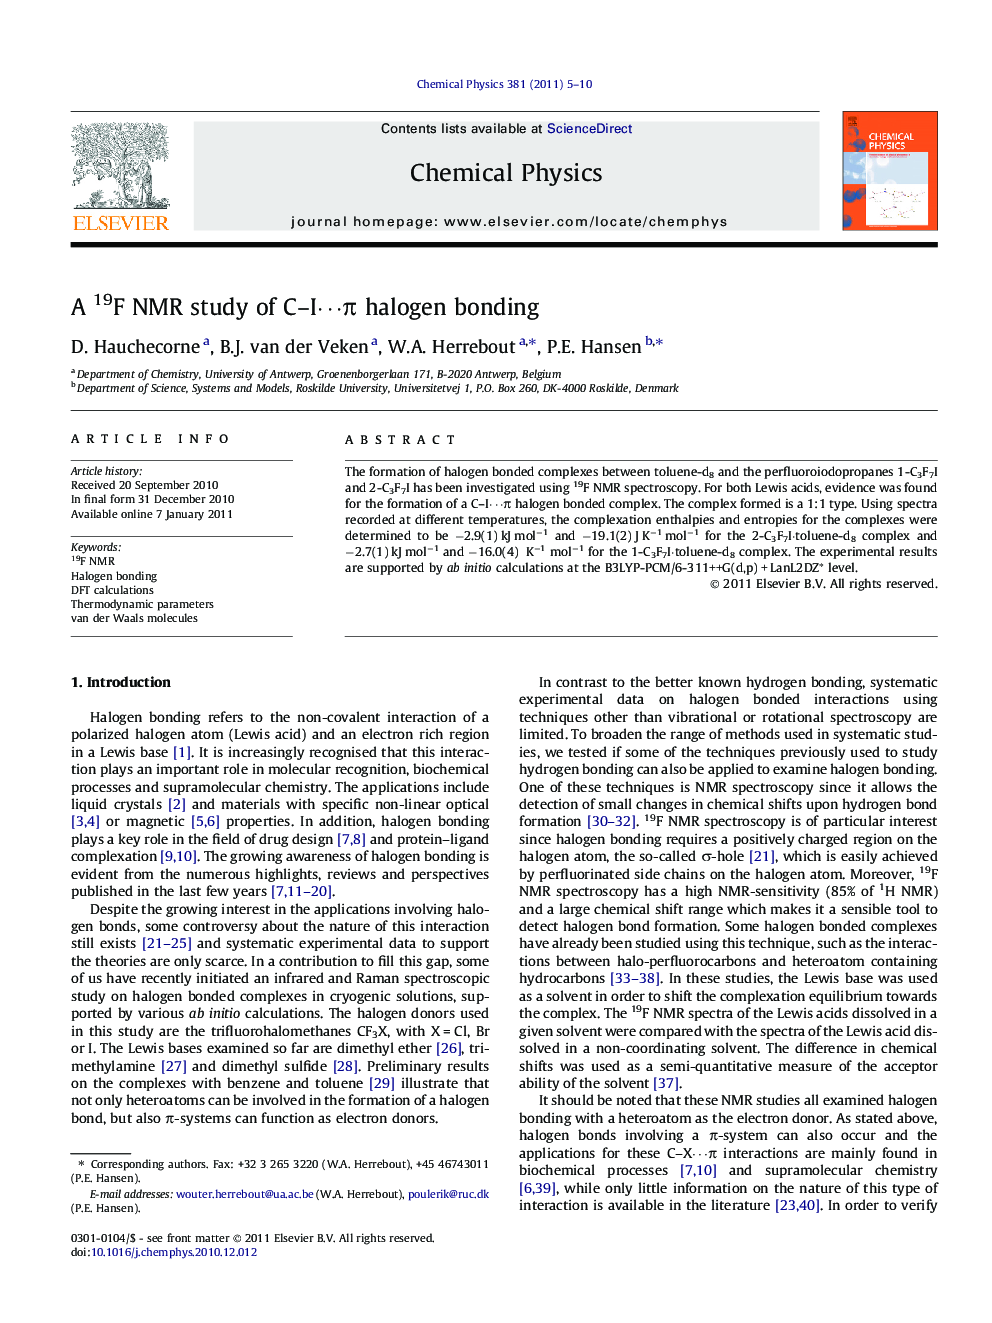 A 19F NMR study of C-Iâ¯Ï halogen bonding